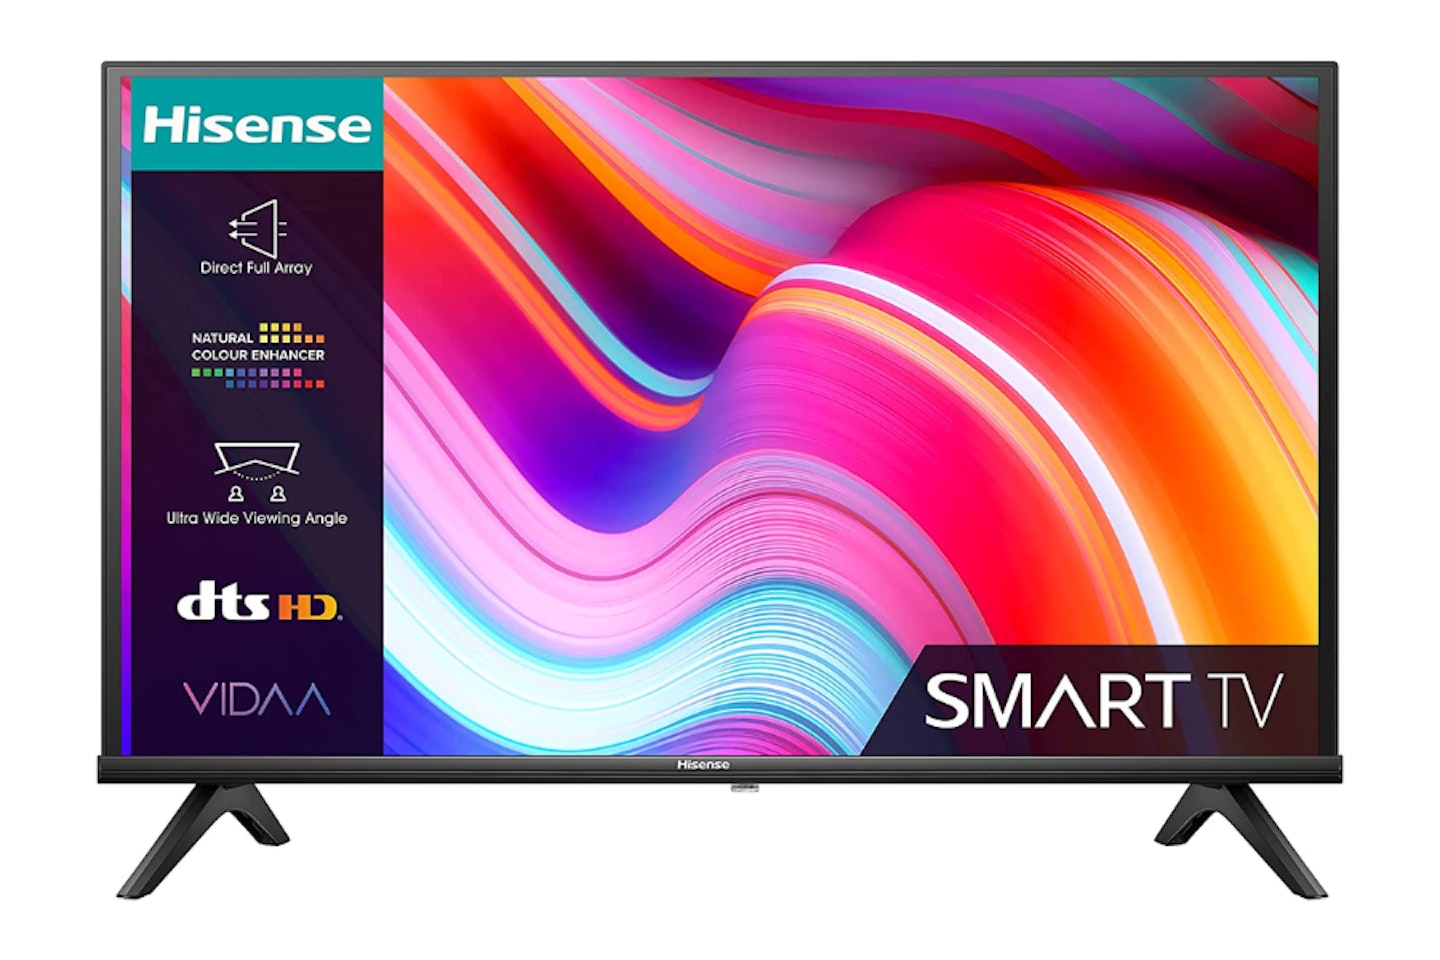 Hisense 32A4BGTUK (32 Inch) HD TV  - one of the best 32-inch TVs